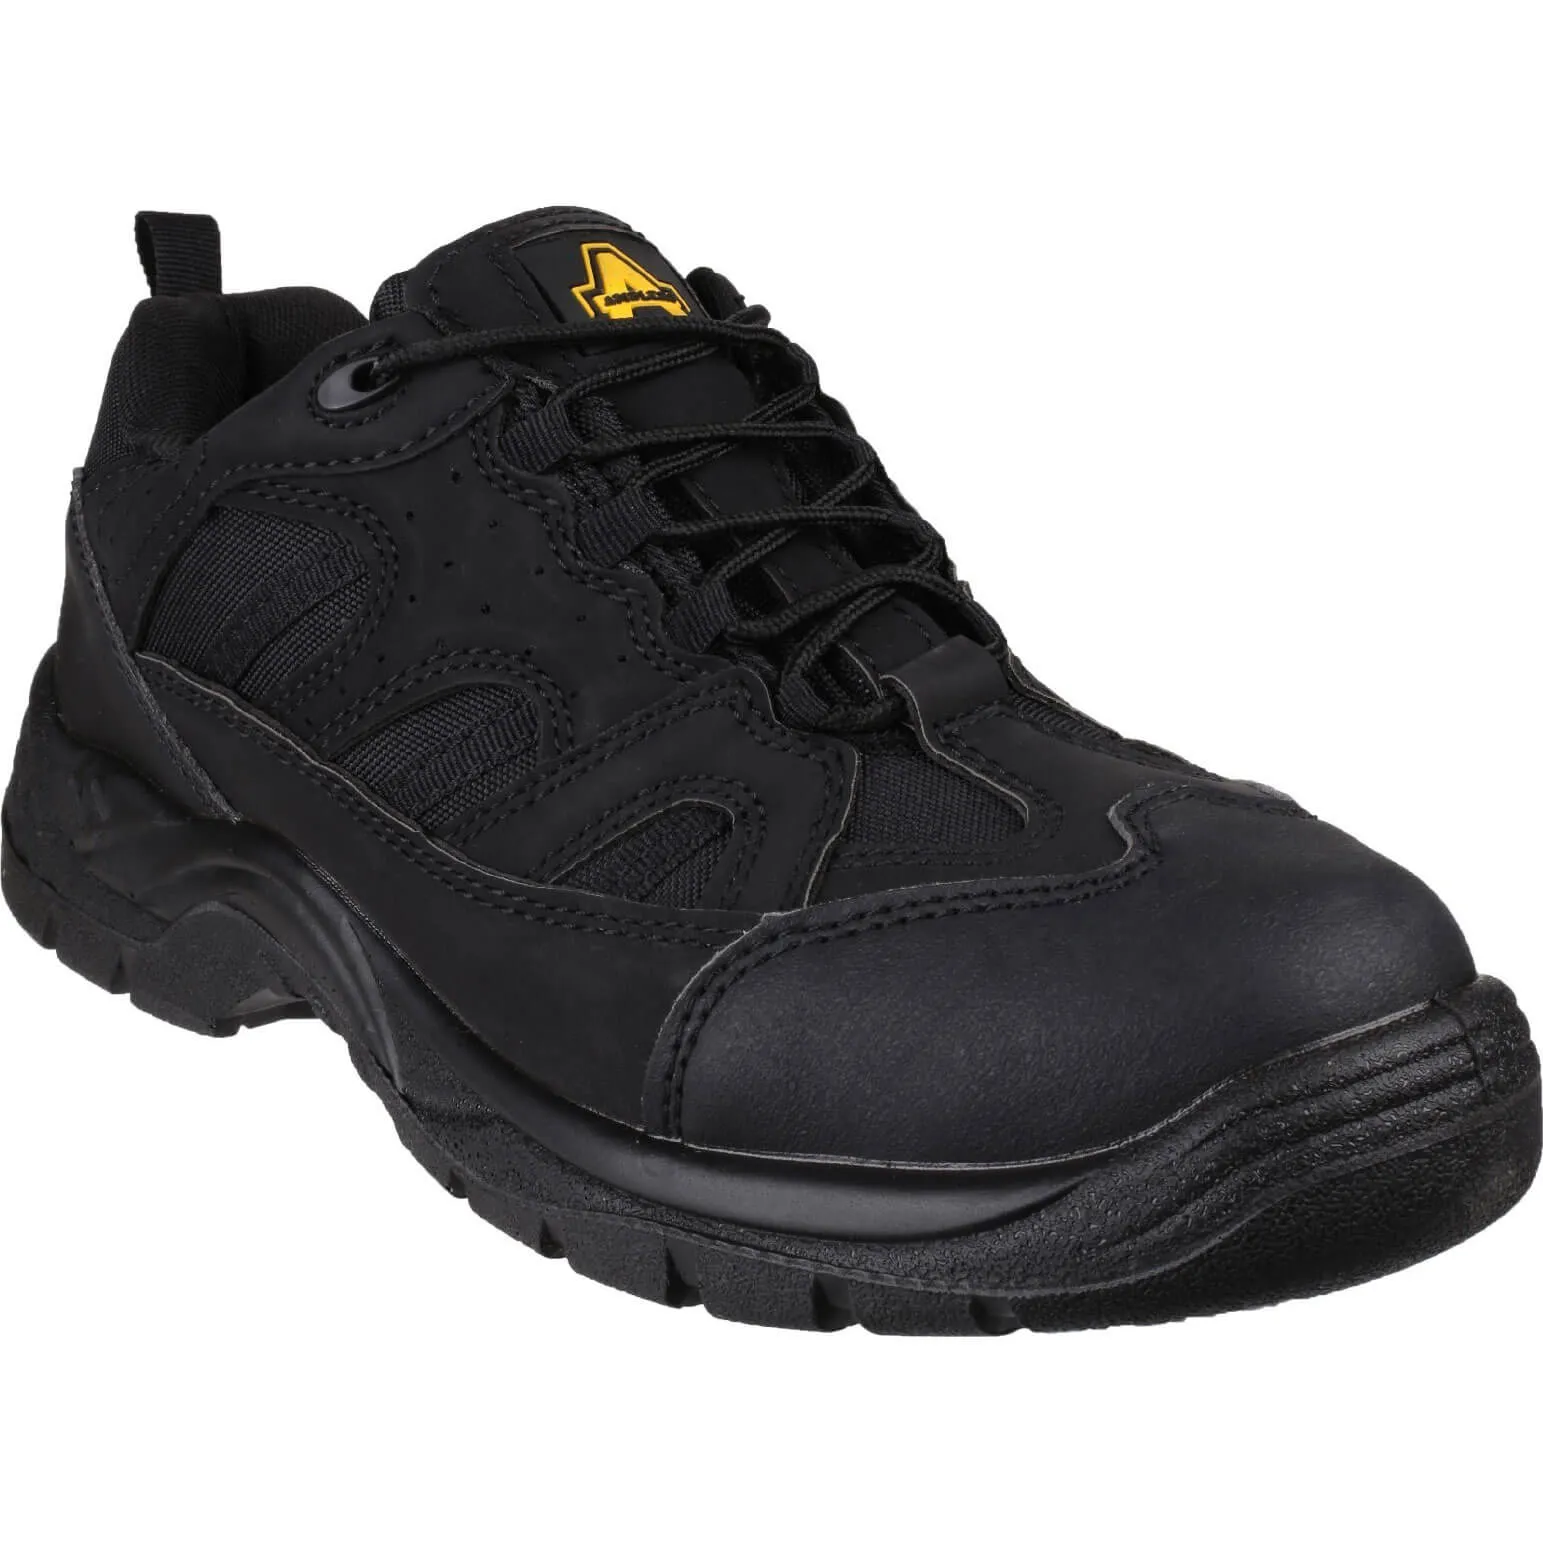 Amblers Safety FS214 Vegan Friendly Safety Shoes - Black, Size 10